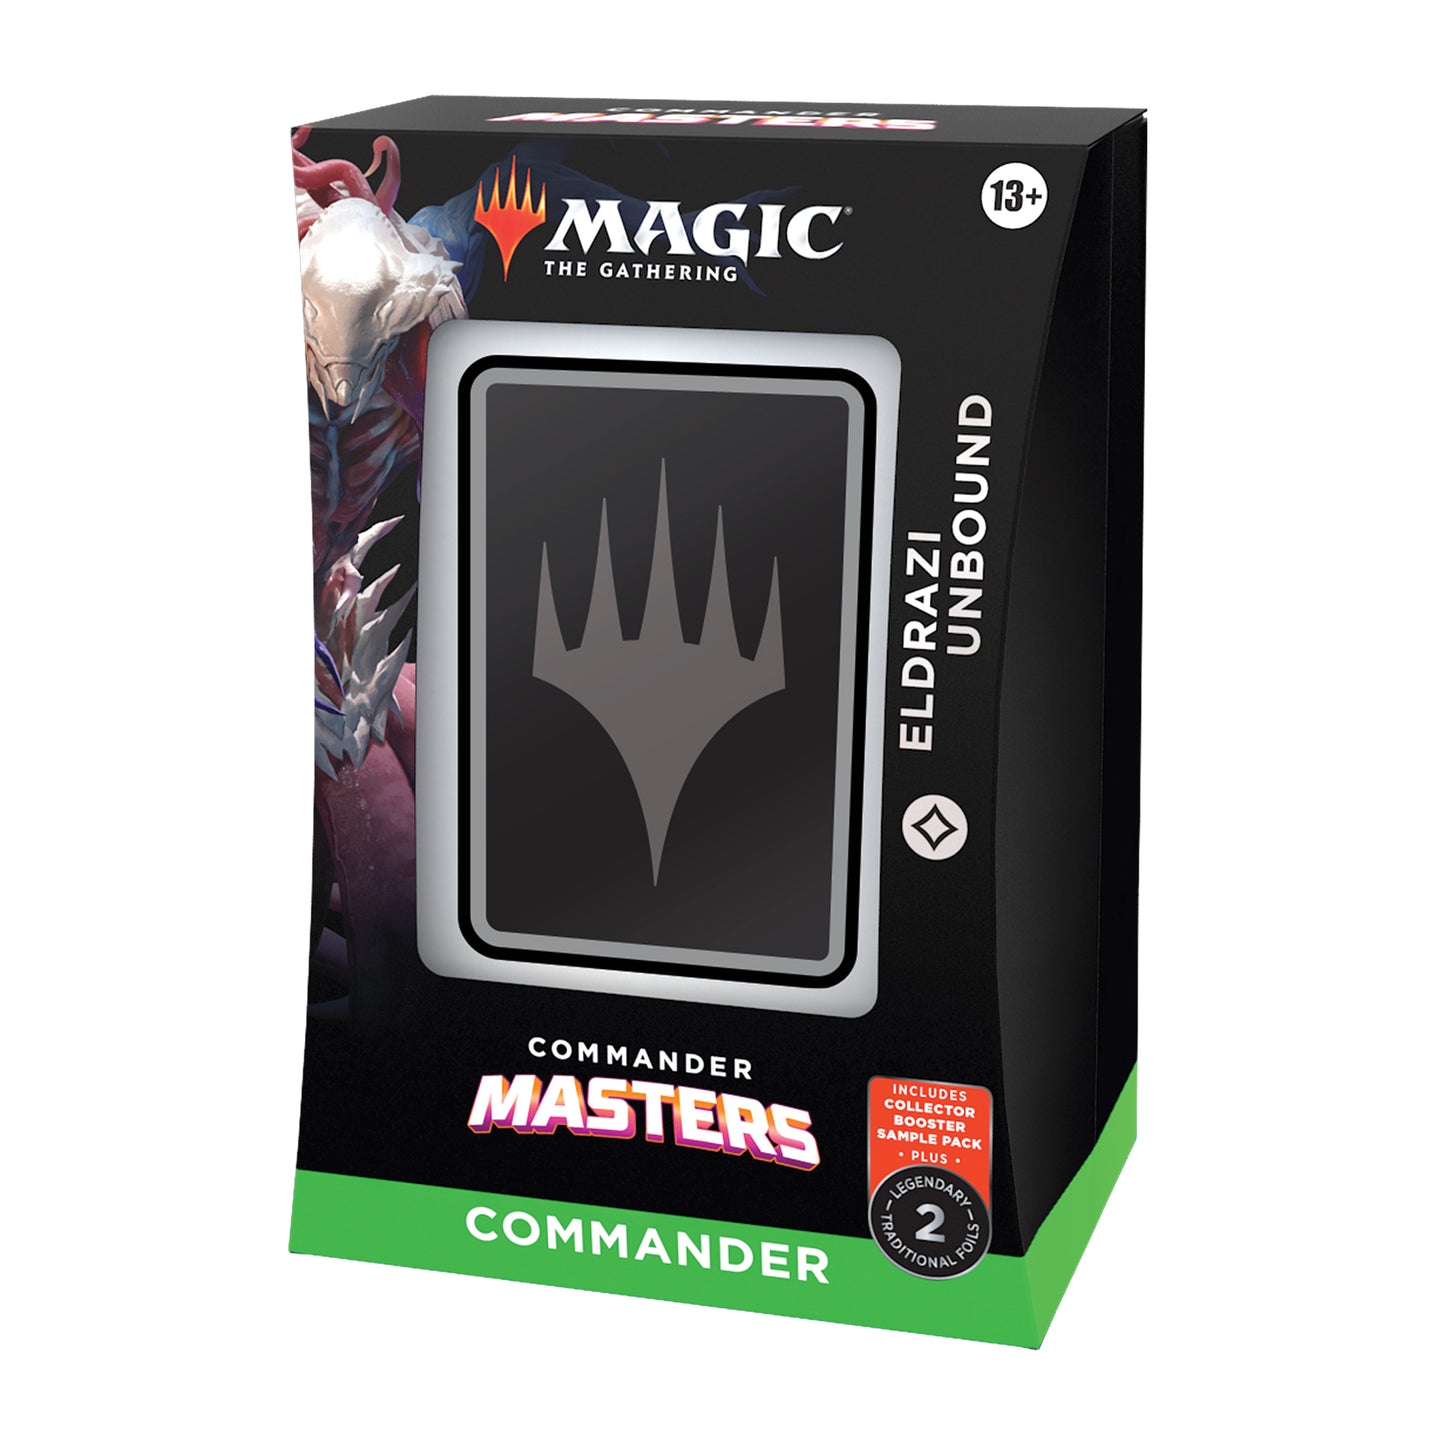 Magic The Gathering: Commander Masters Commander Deck Case